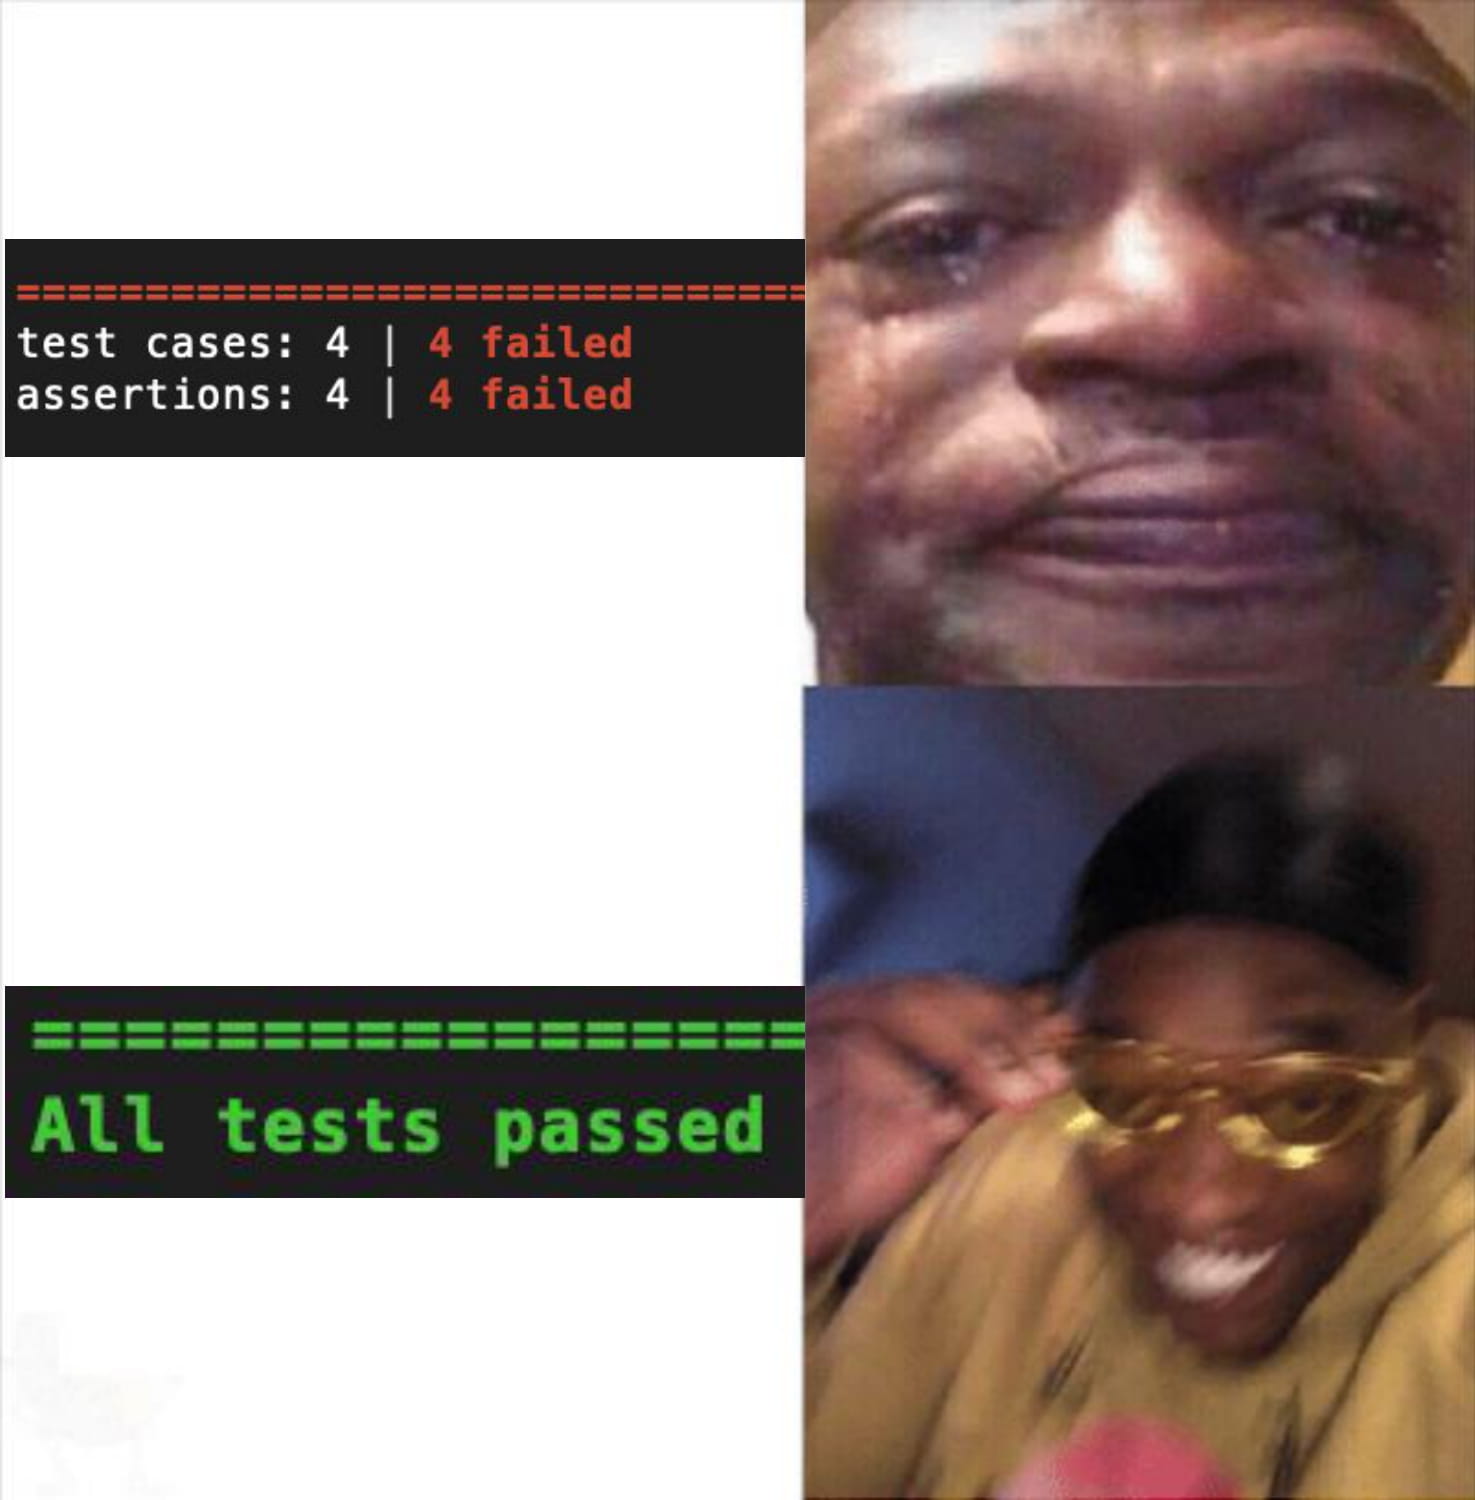 tests don't pass/sad; tests pass/happy